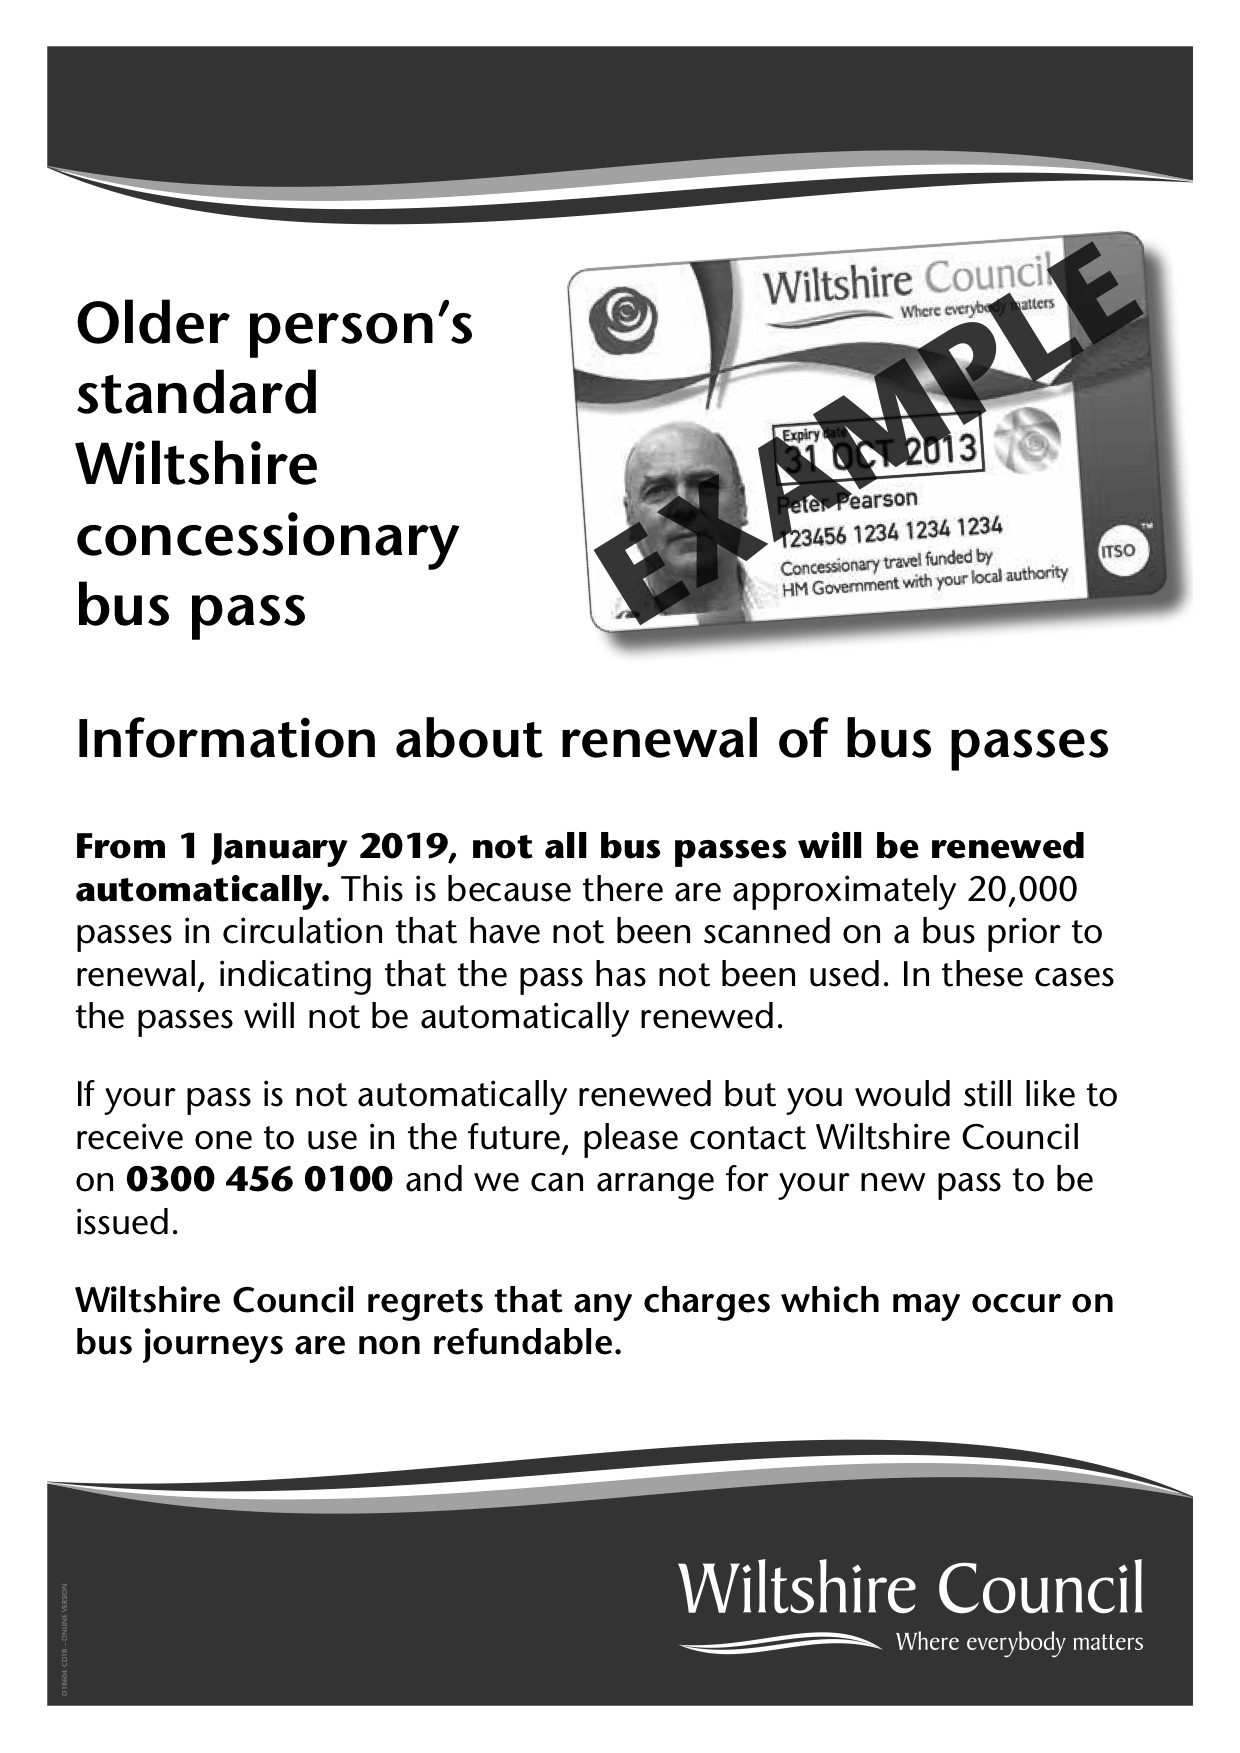 west midlands travel senior bus pass